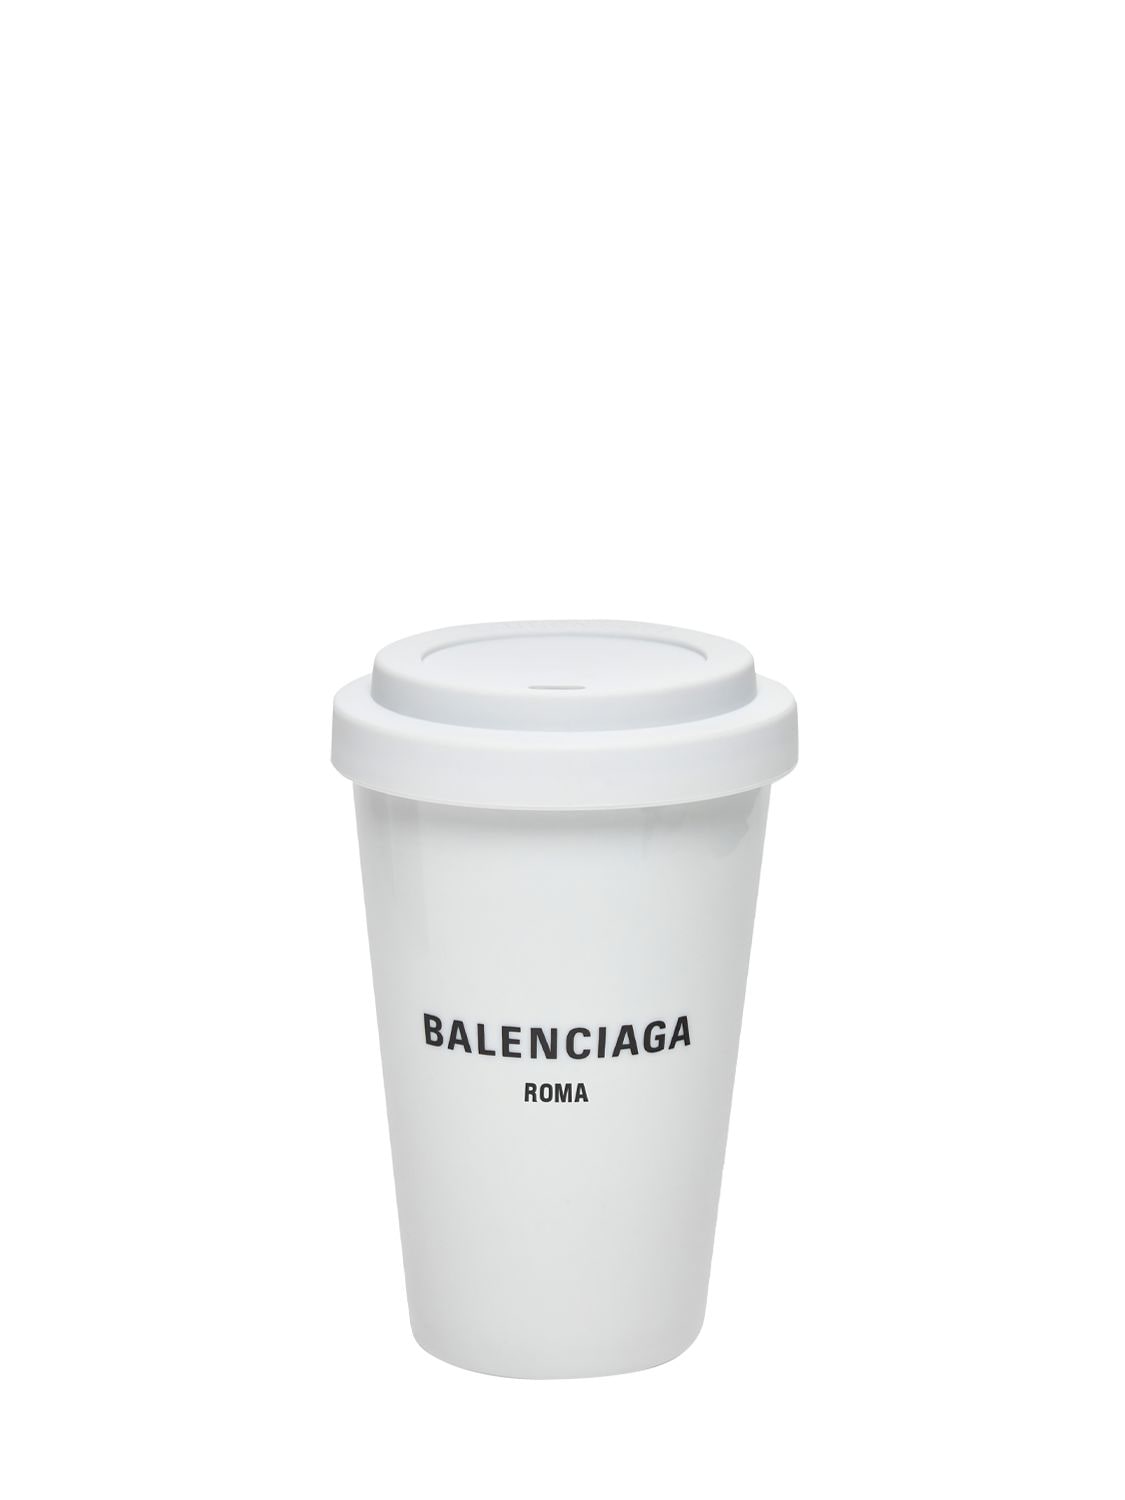 Balenciaga Roma Porcelain Coffee Cup In White